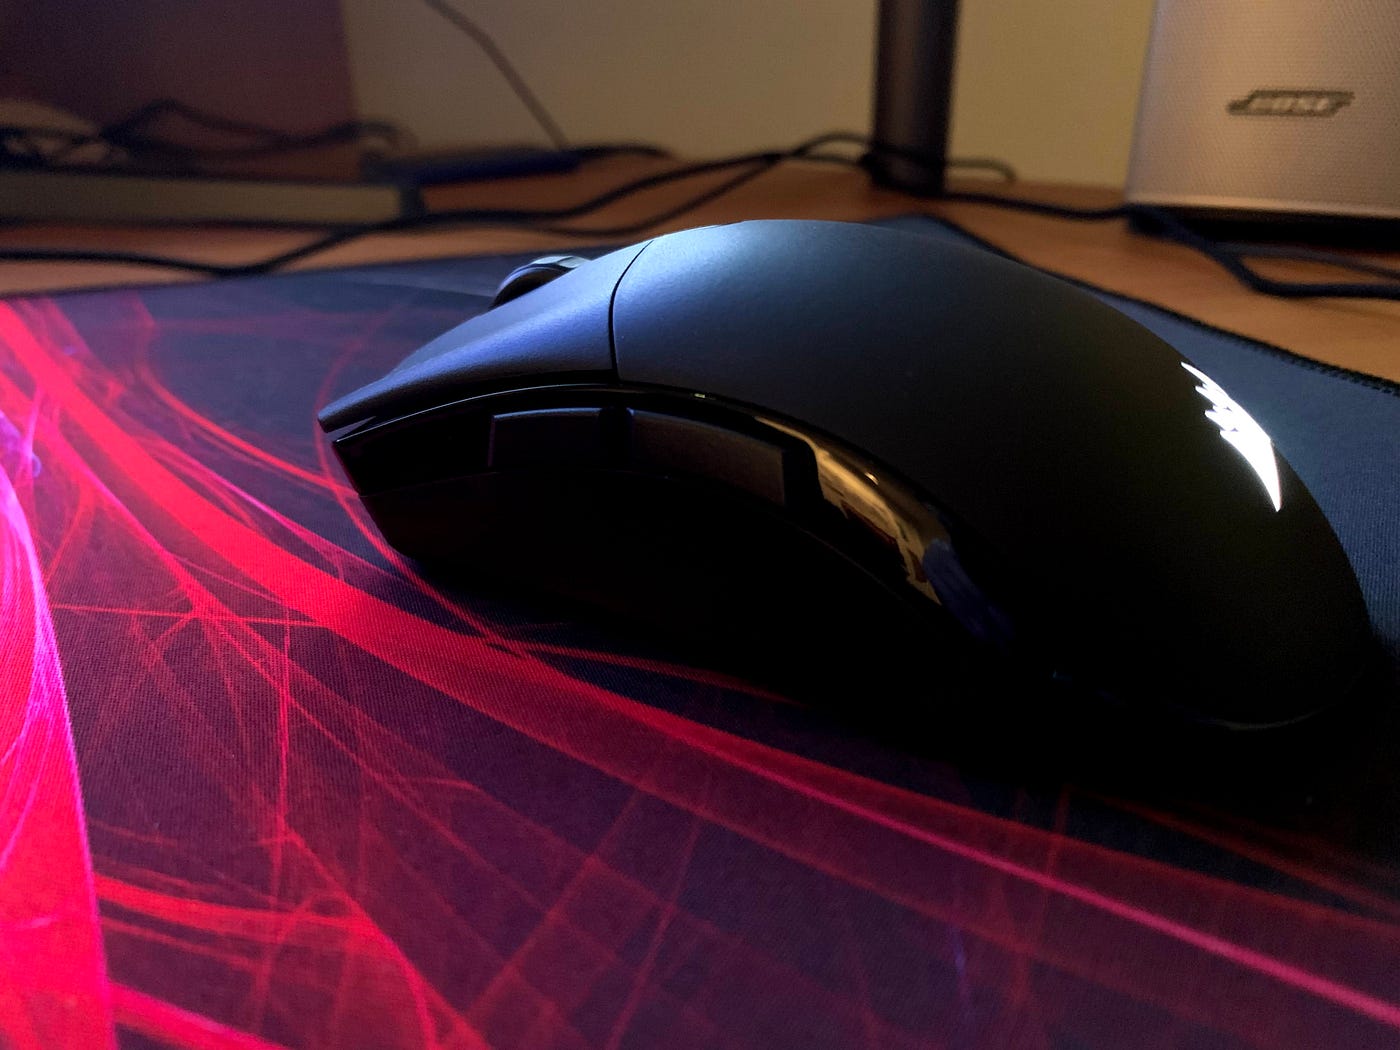 Corsair Sabre RGB Pro Wireless Gaming Mouse | by Alex Rowe | Medium